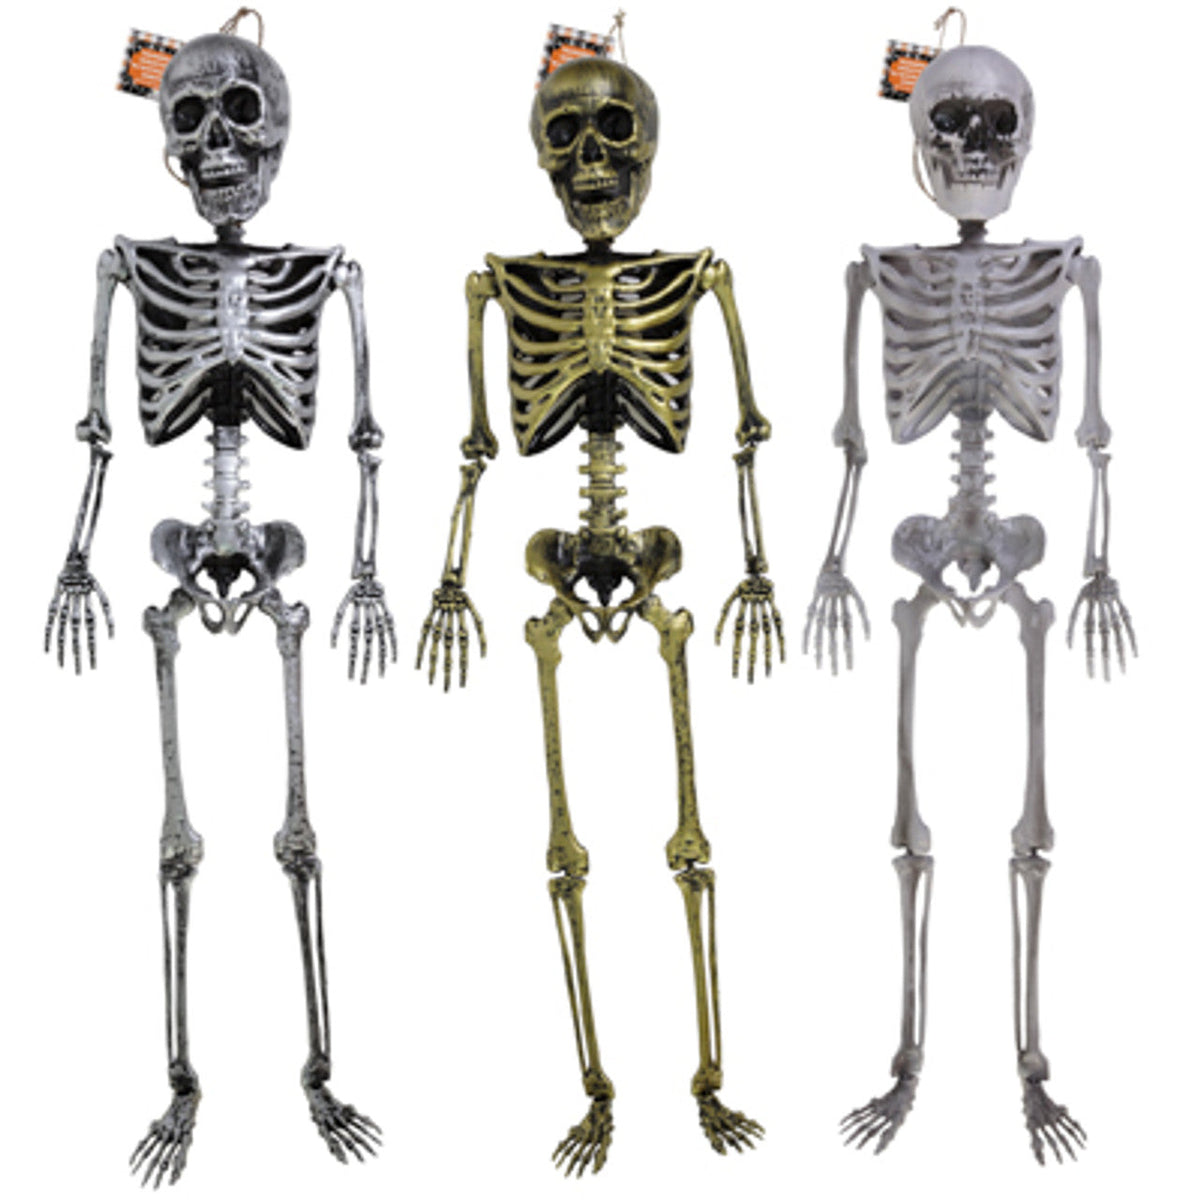 REGEN PRODUCTS CORP. Halloween Hanging Skeleton, 36 Inches, Assortment, 1 Count